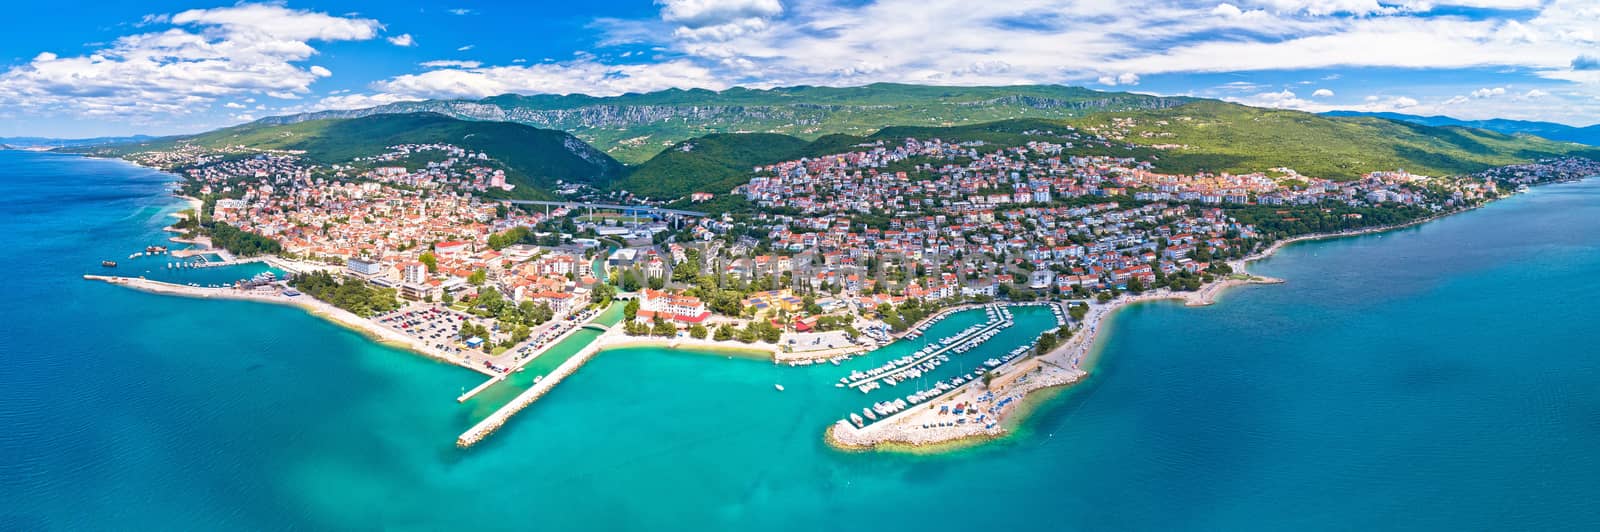 Crikvenica. Town on Adriatic sea waterfront aerial panoramic view. Kvarner bay region of Croatia